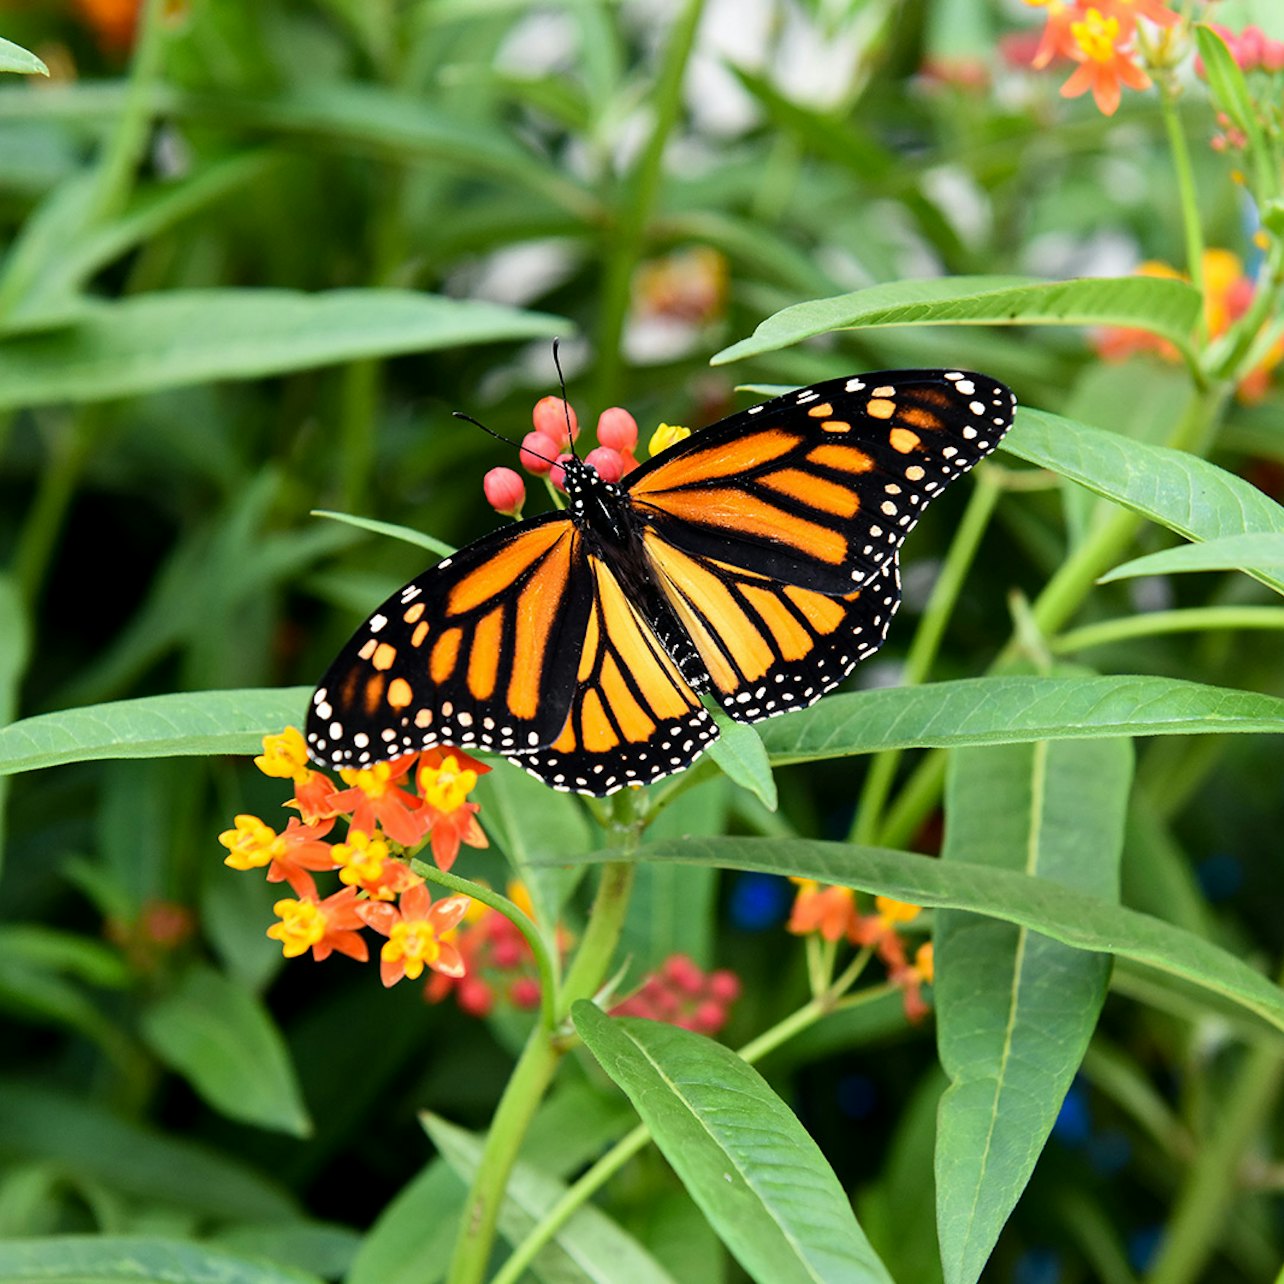 Niagara Falls Butterfly Conservatory - Accommodations in Niagara Falls